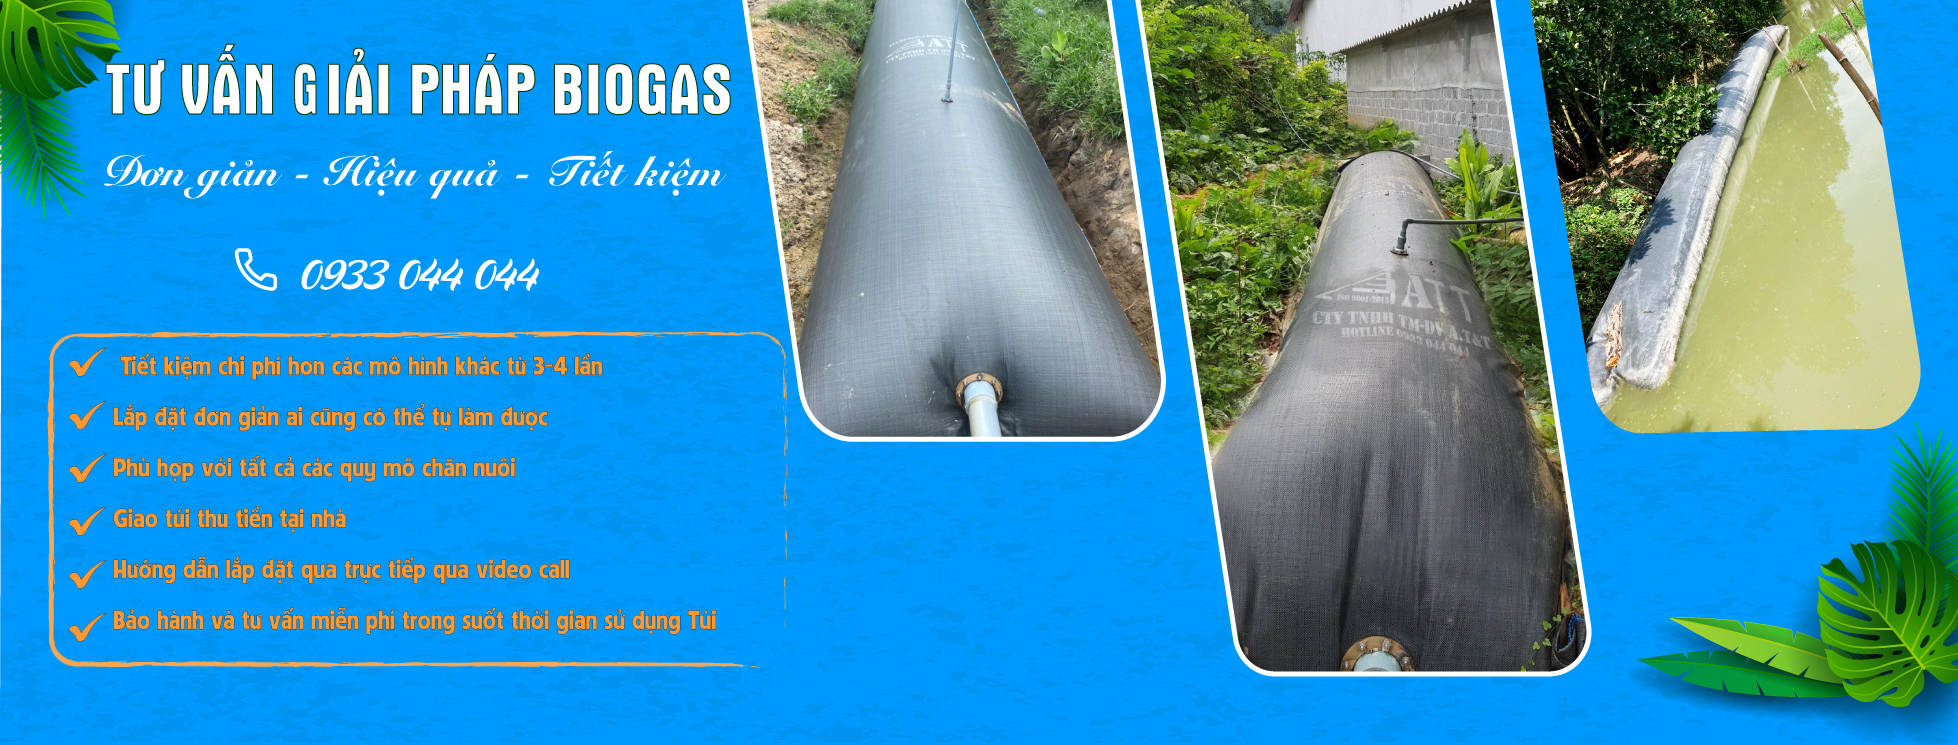 biogas web 3